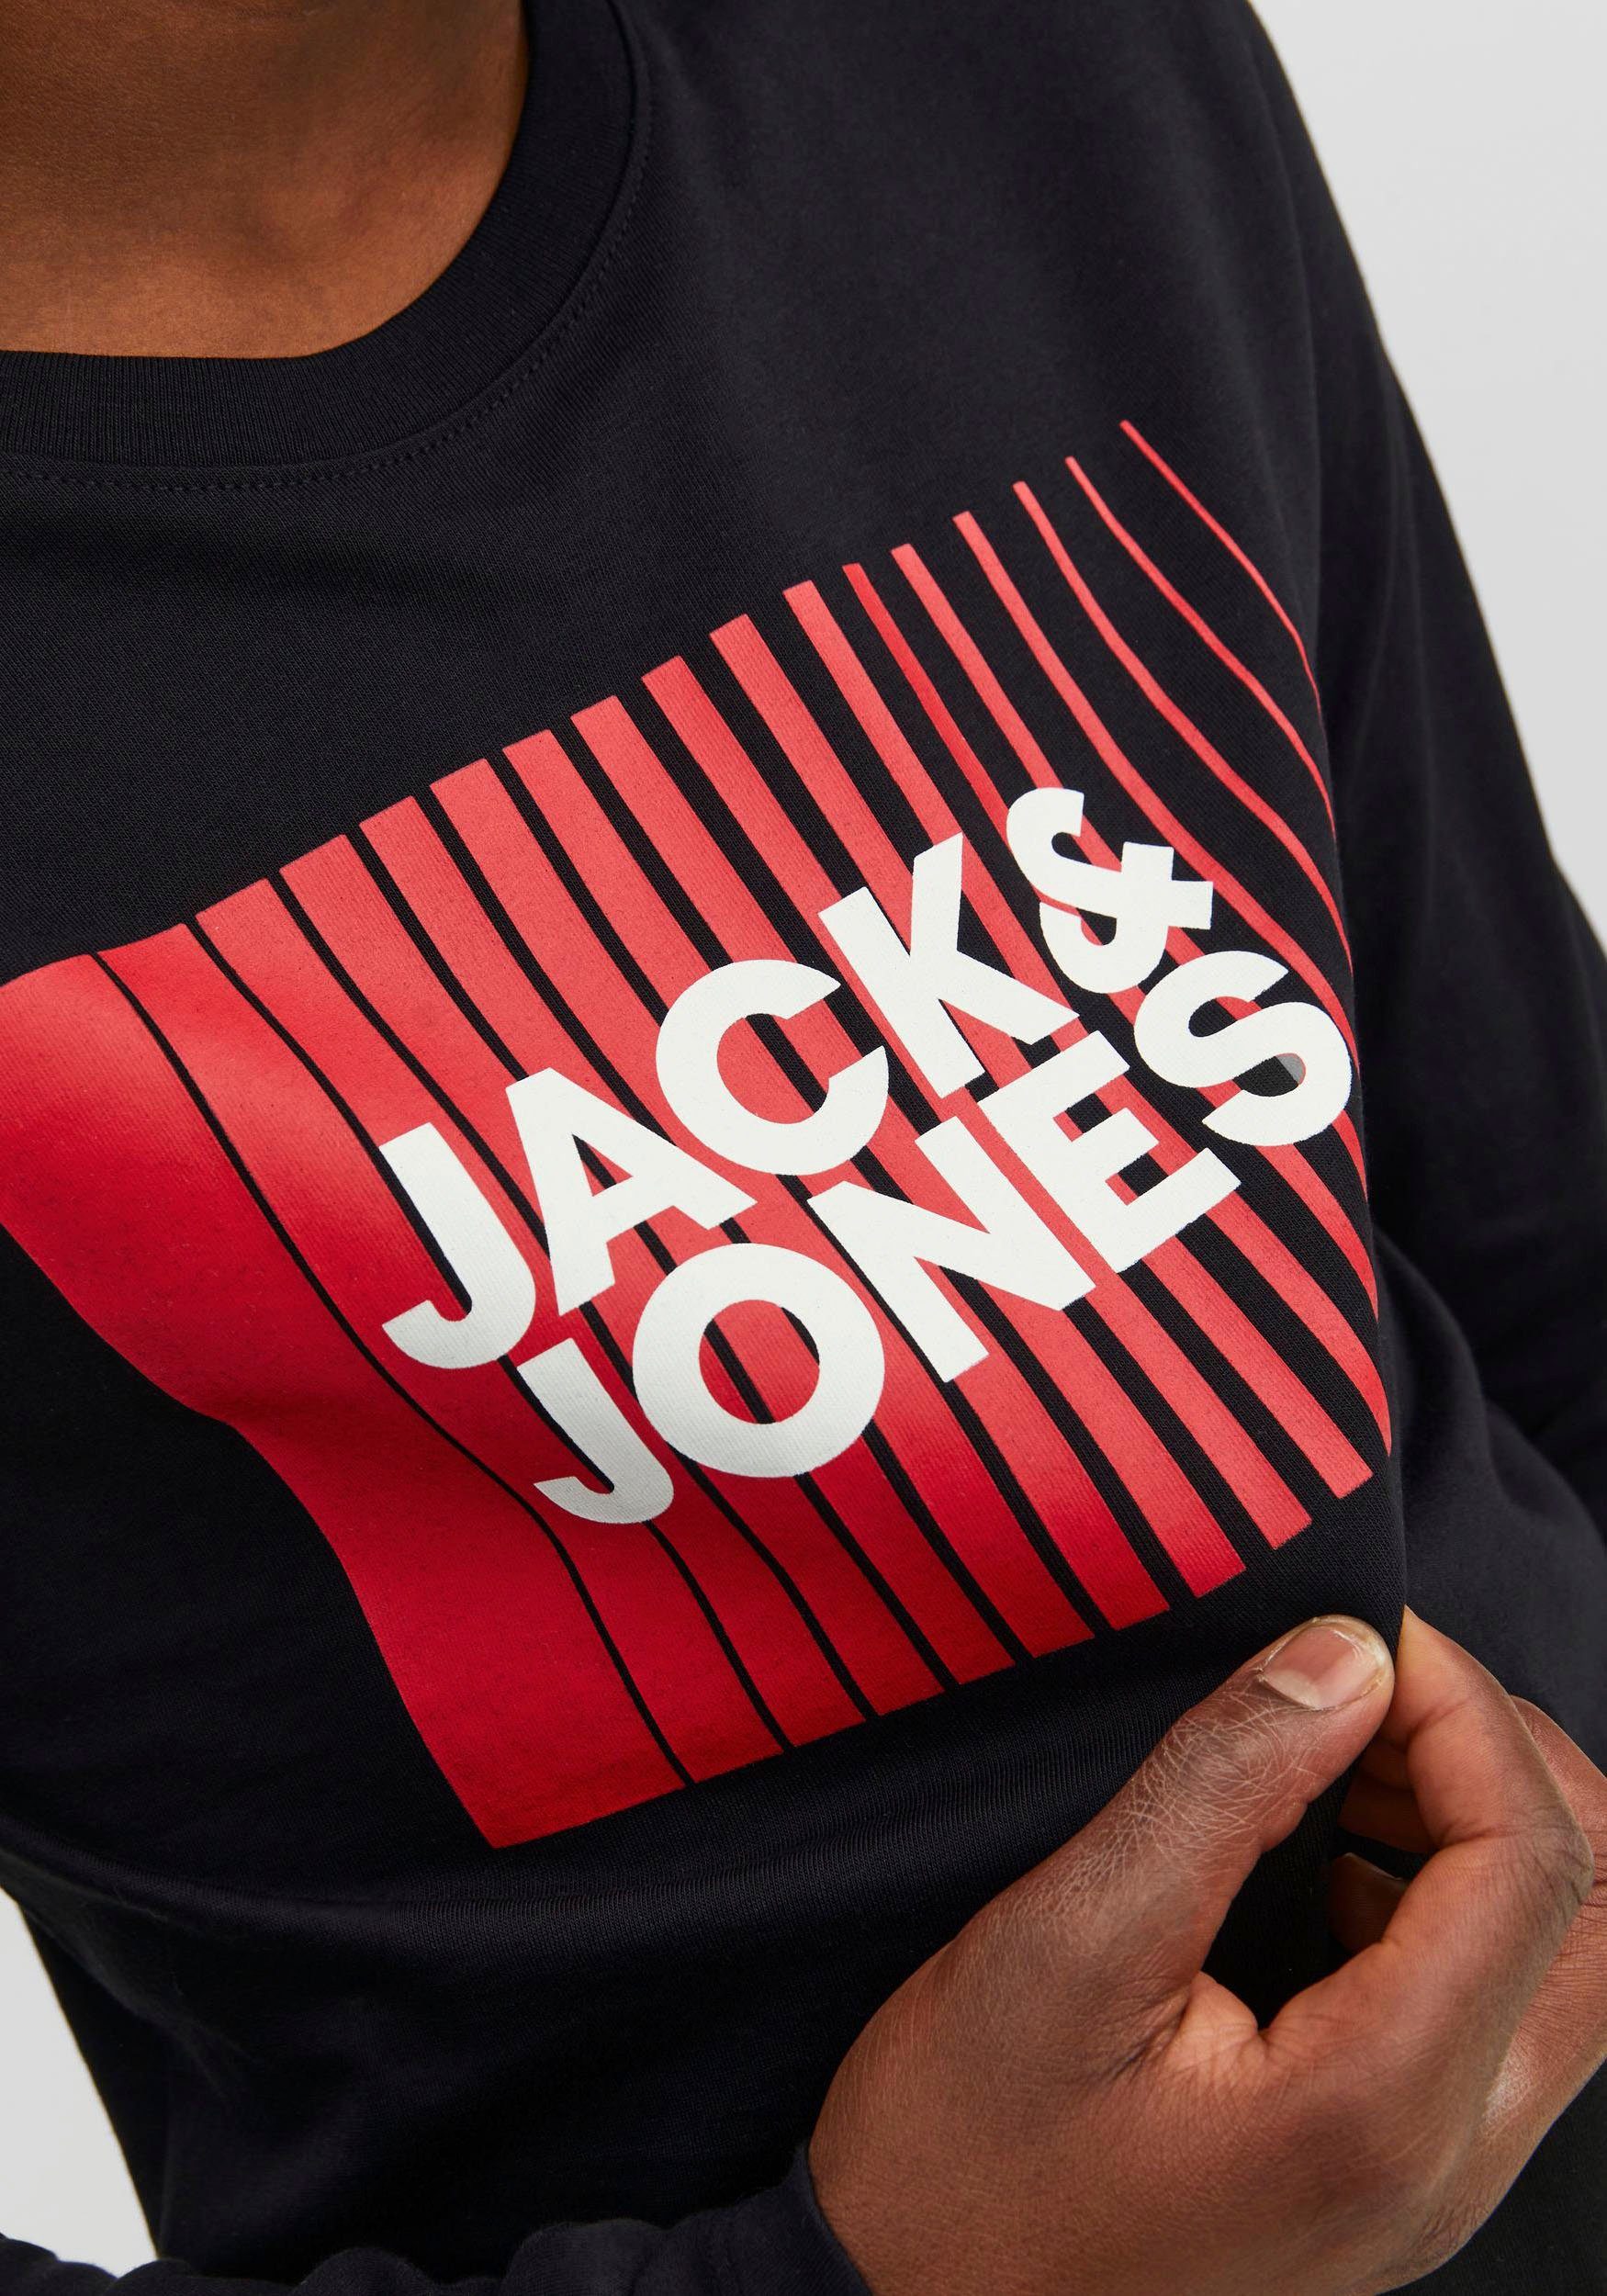 Jack & O-NECK Jones Langarmshirt TEE Black NOOS PLAY JJECORP LS Junior LOGO JNR